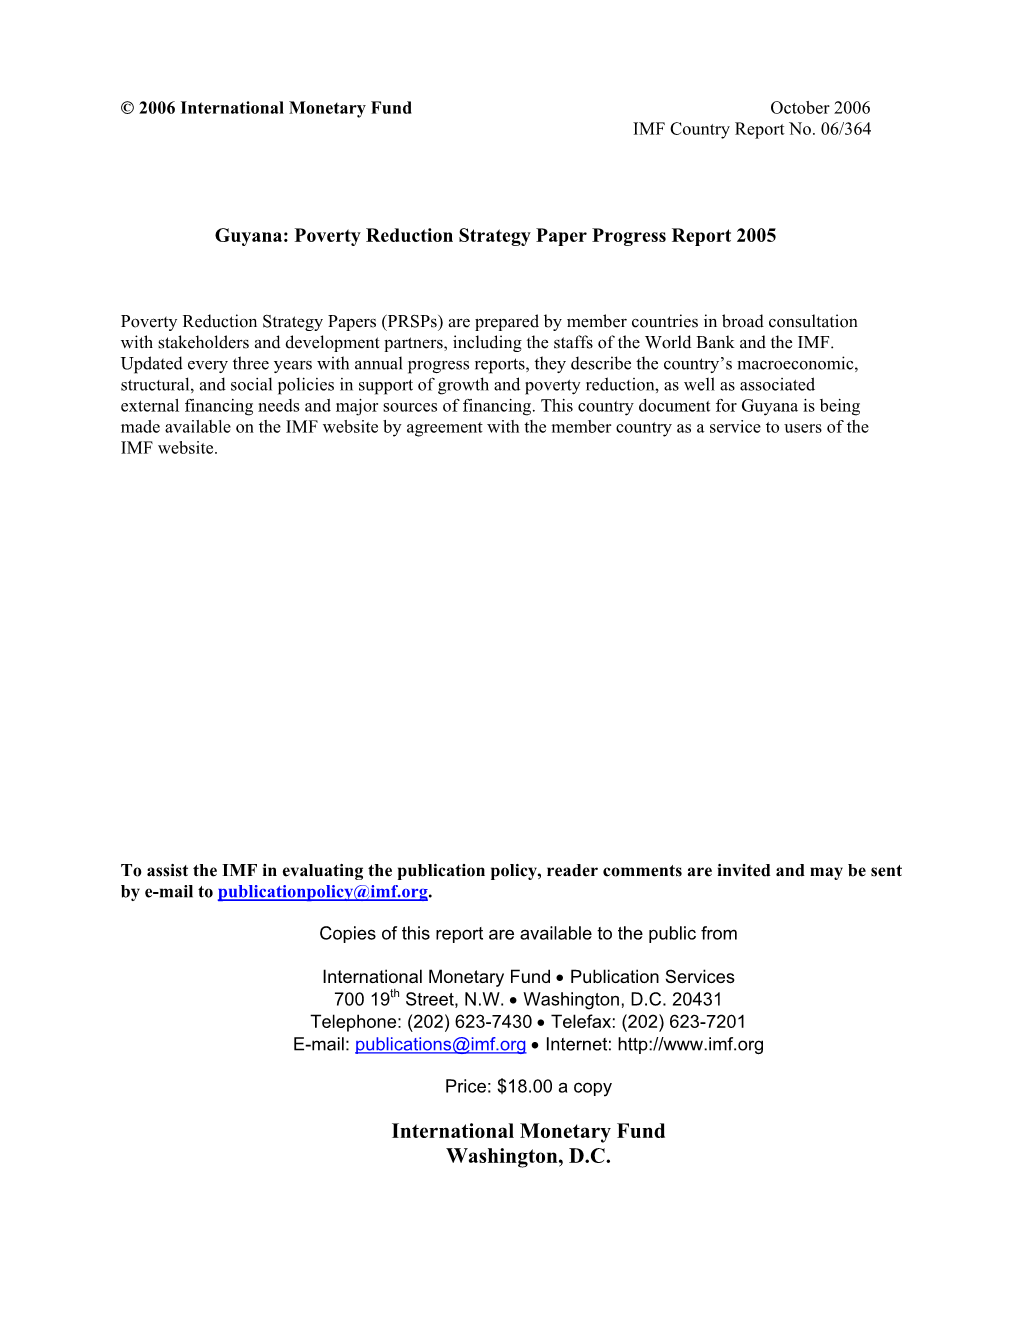 Guyana: Poverty Reduction Strategy Paper Progress Report 2005